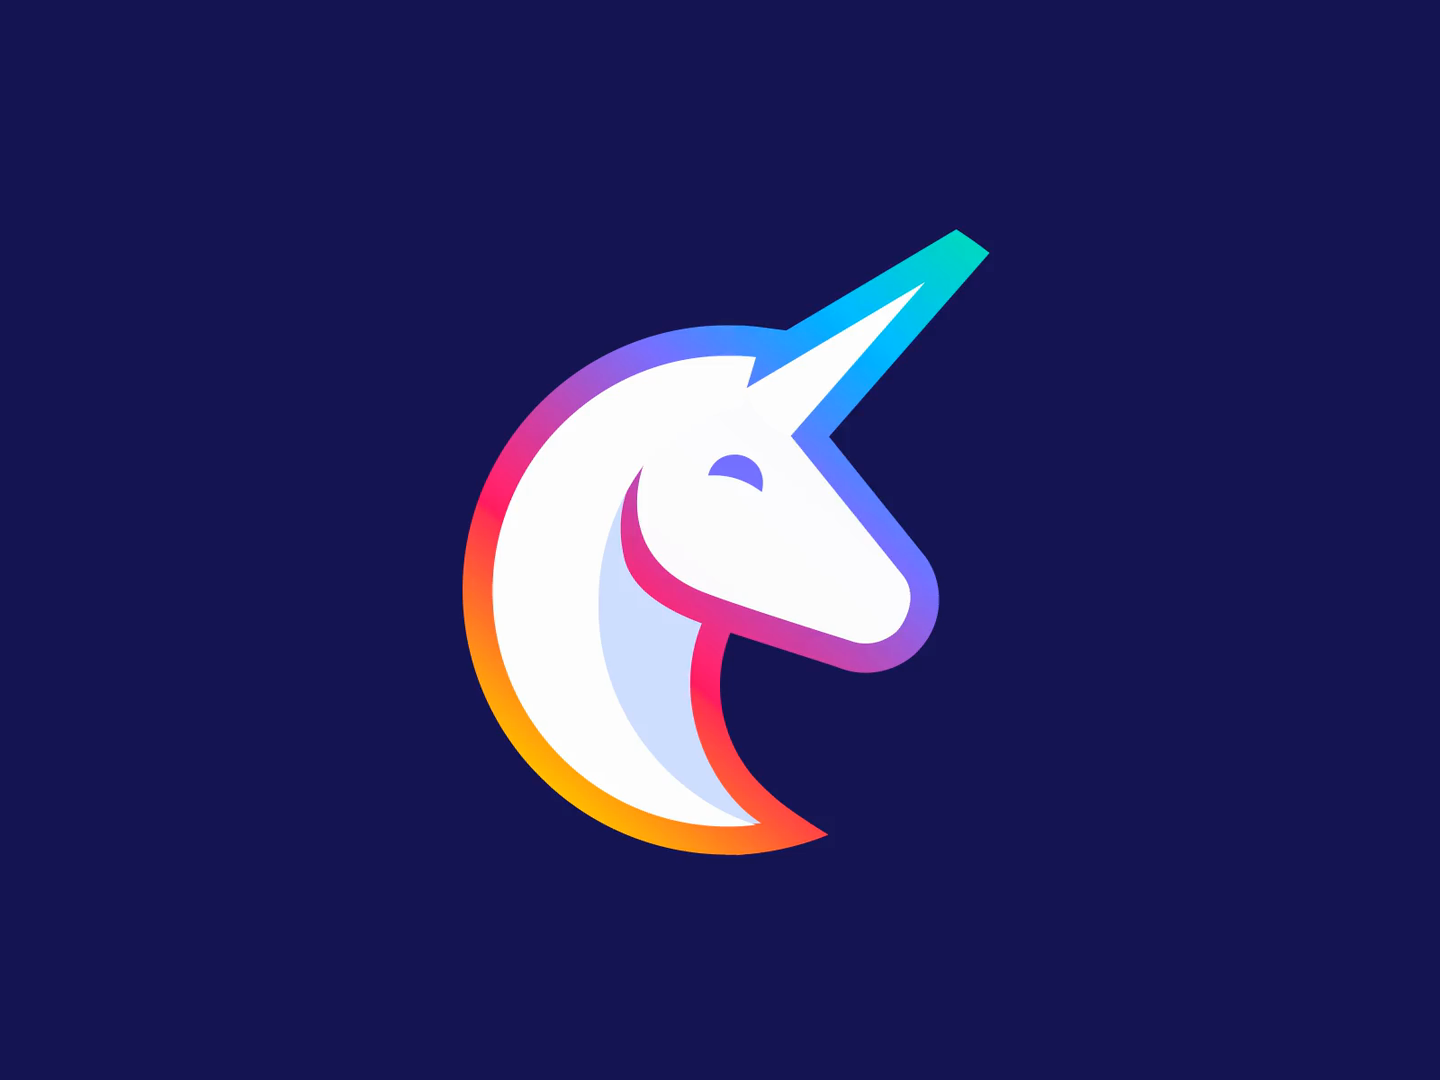 Unicorn Logo Animation by Alex Gorbunov on Dribbble